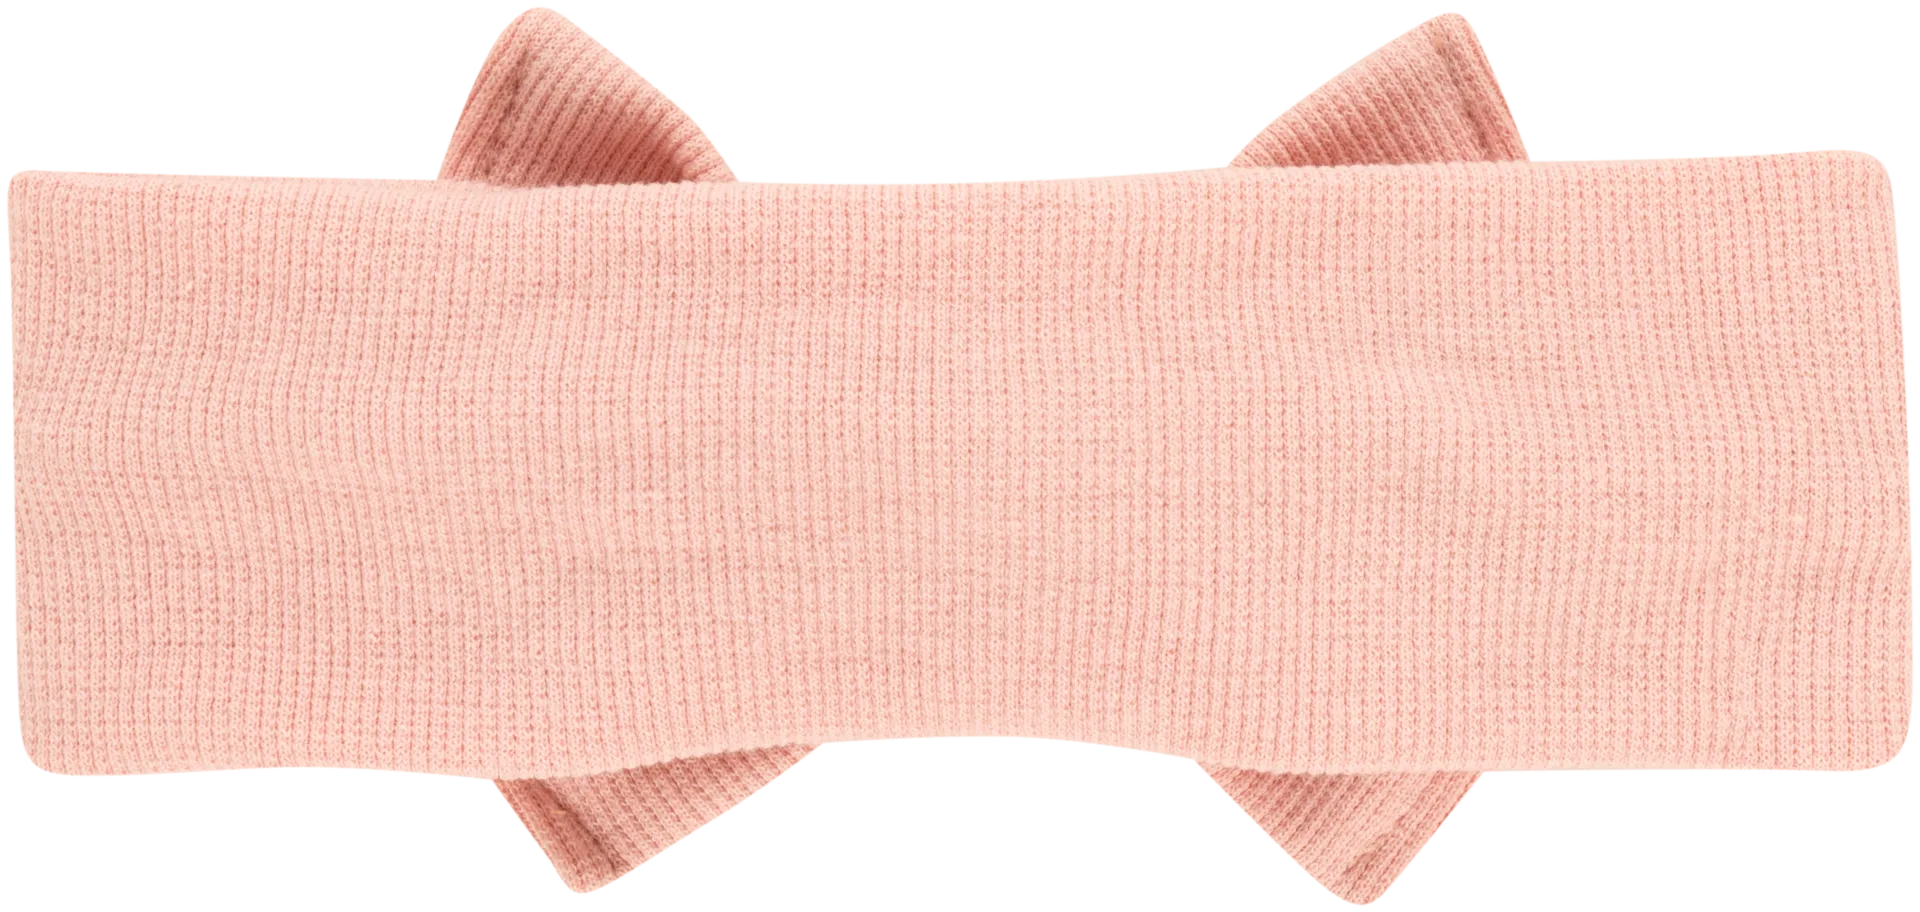 Ciraf lasten panta 238C132409 - Pirouette pink - 2